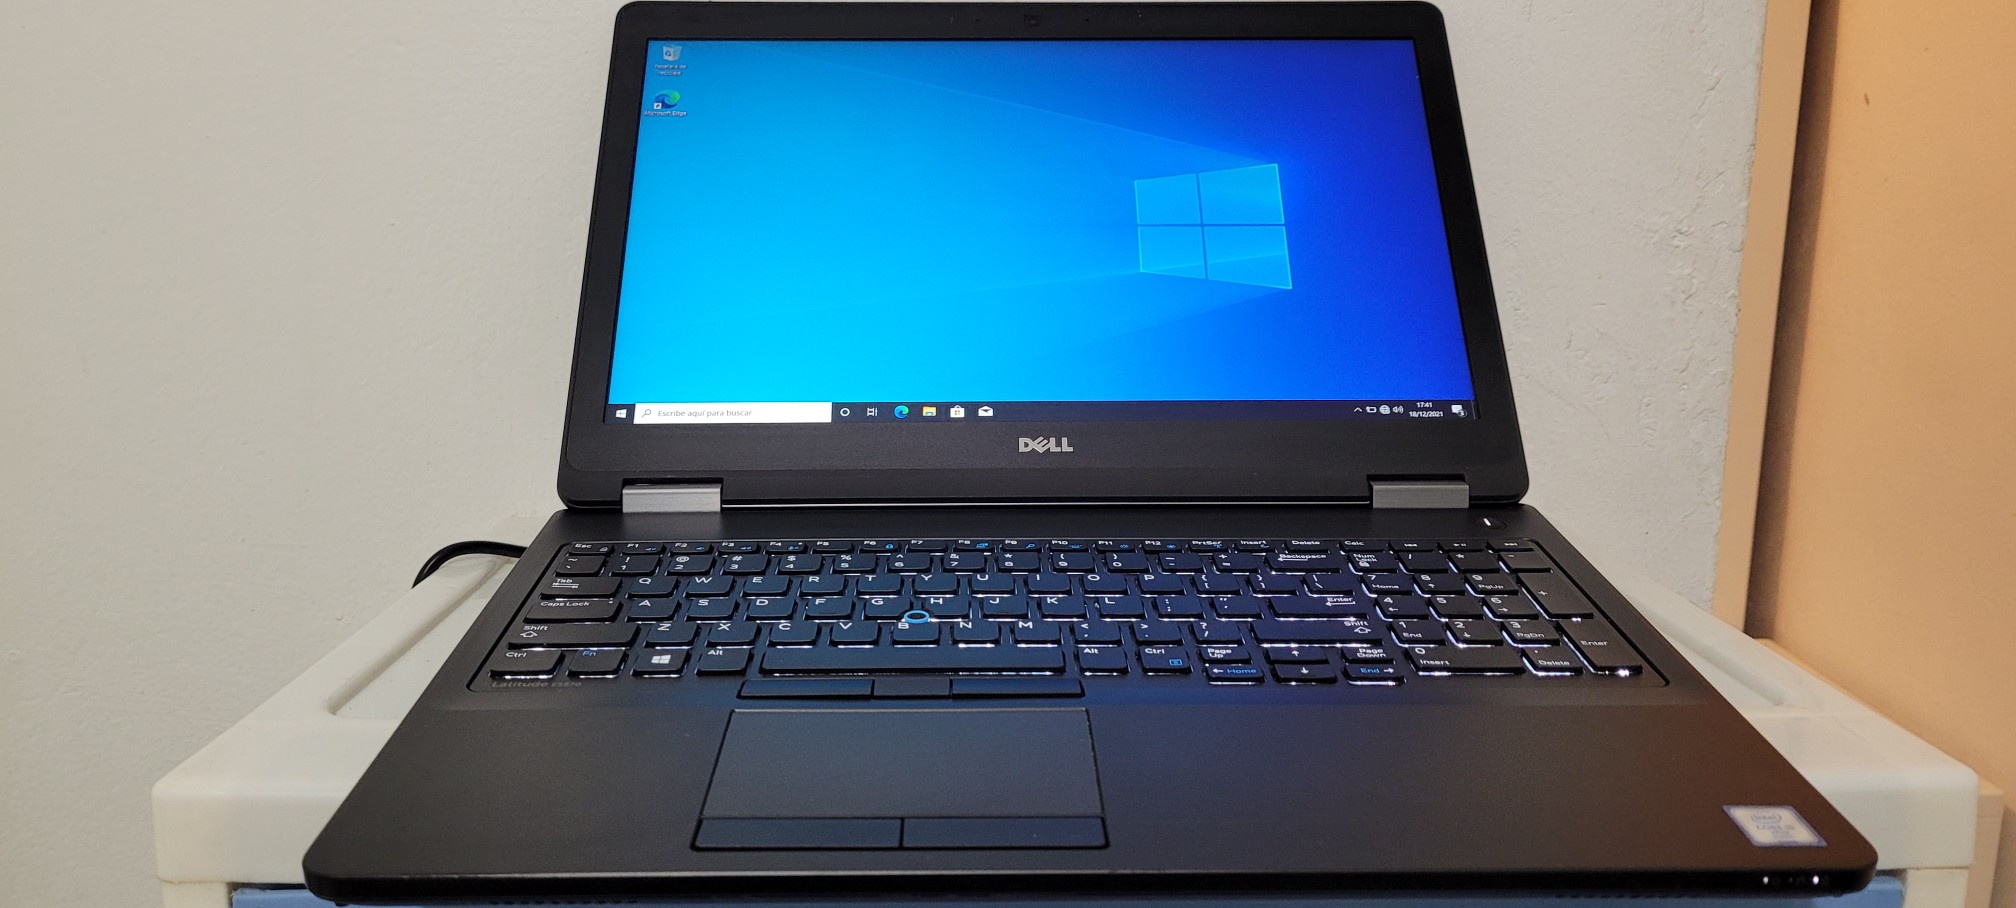 computadoras y laptops - Dell latirude 17 Pulg Core i7 Ram 8gb Disco 1000gb hdmi Full